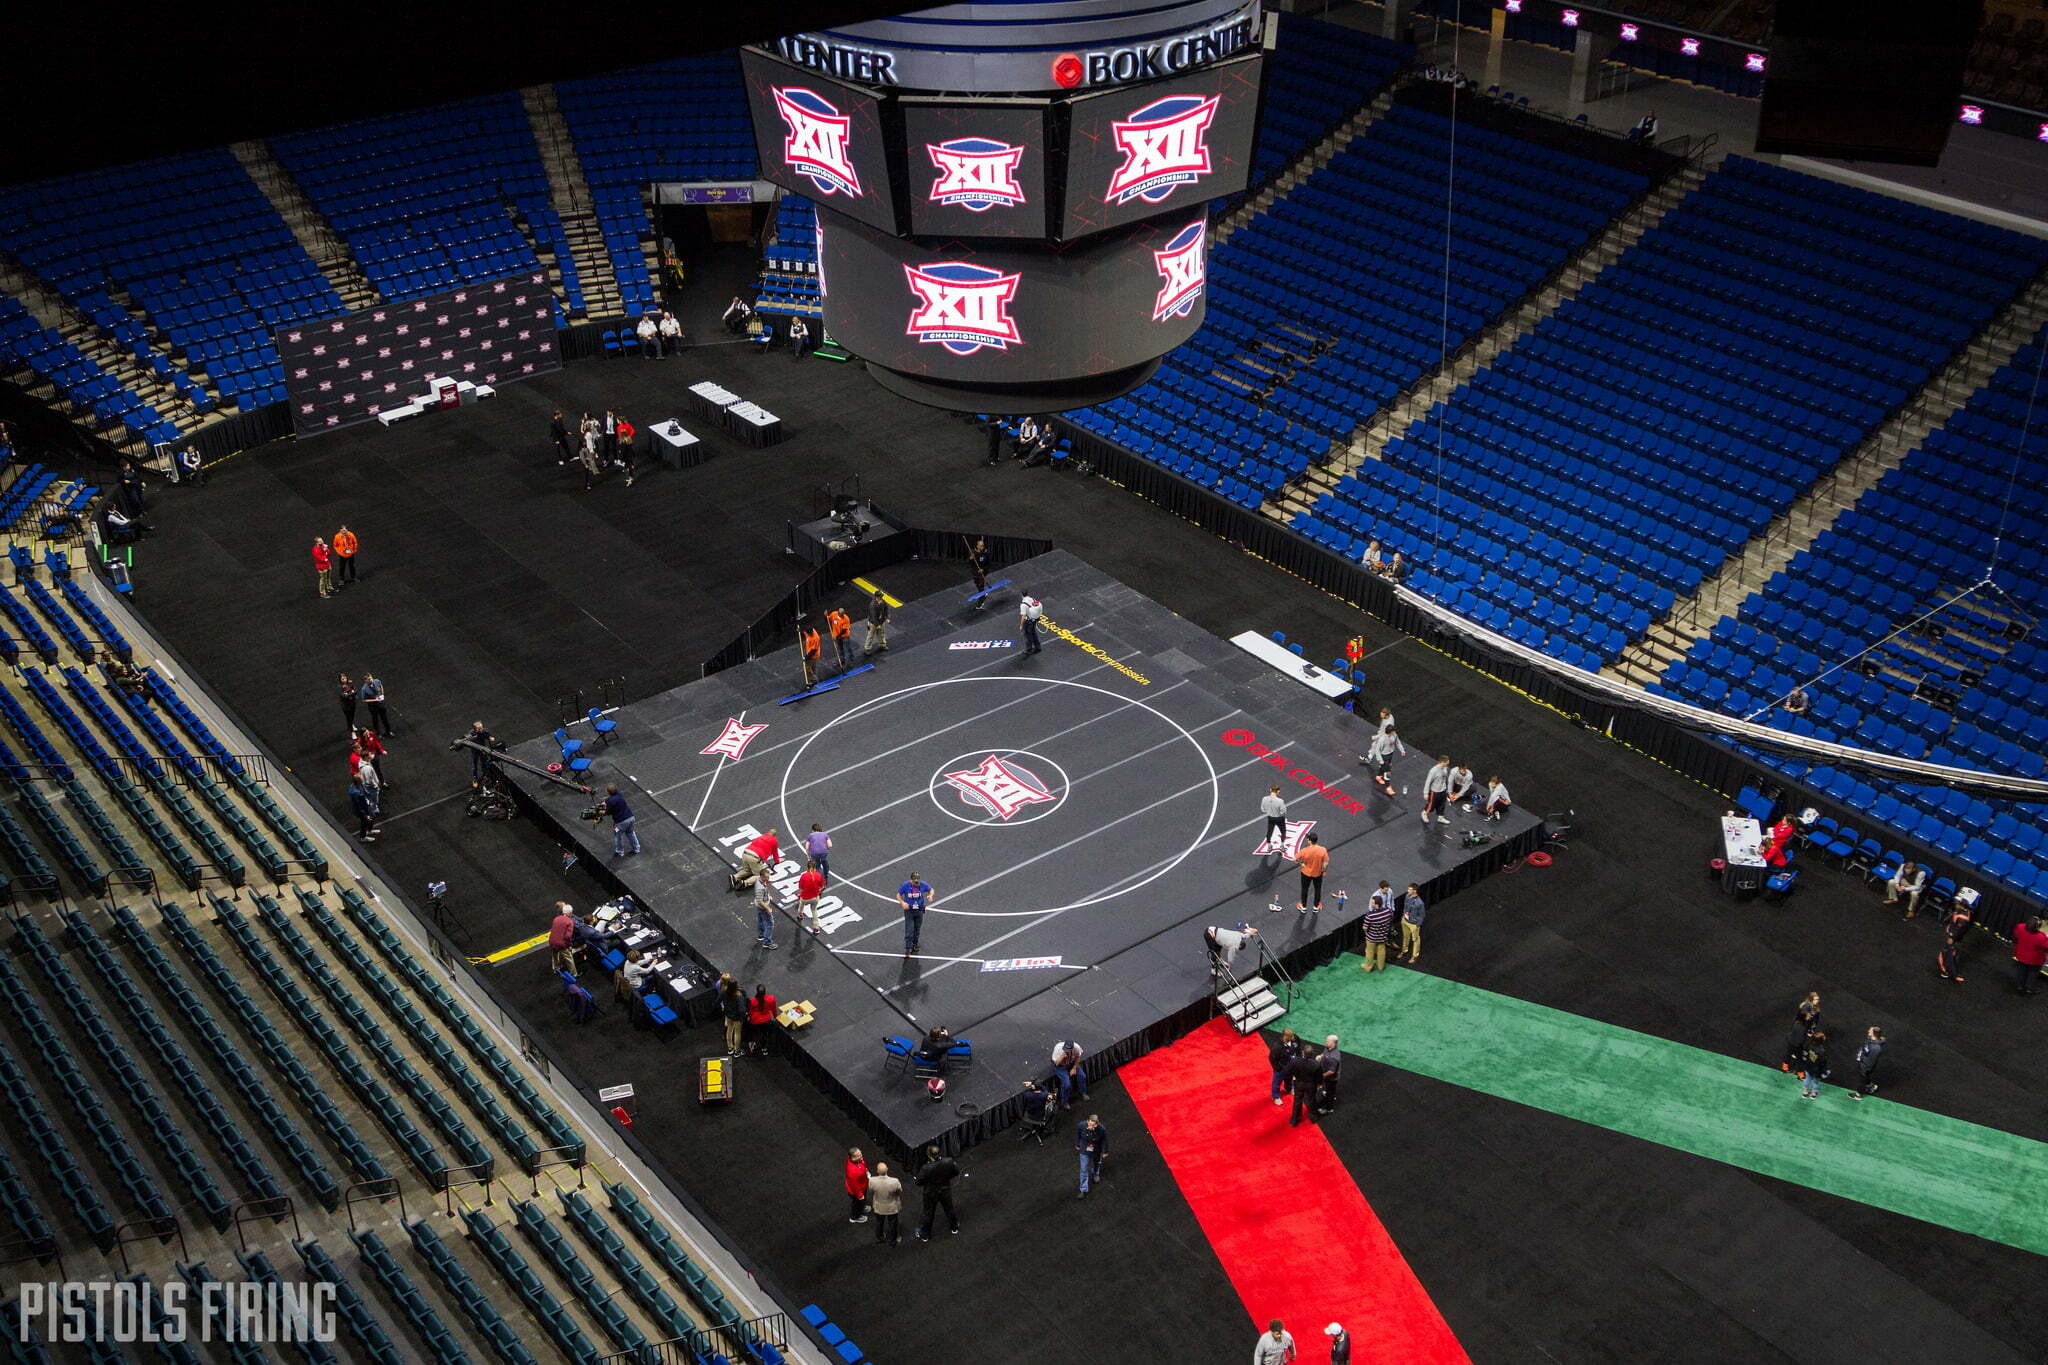 Tulsa to Host 2023 NCAA Wrestling Tournament | Pistols Firing